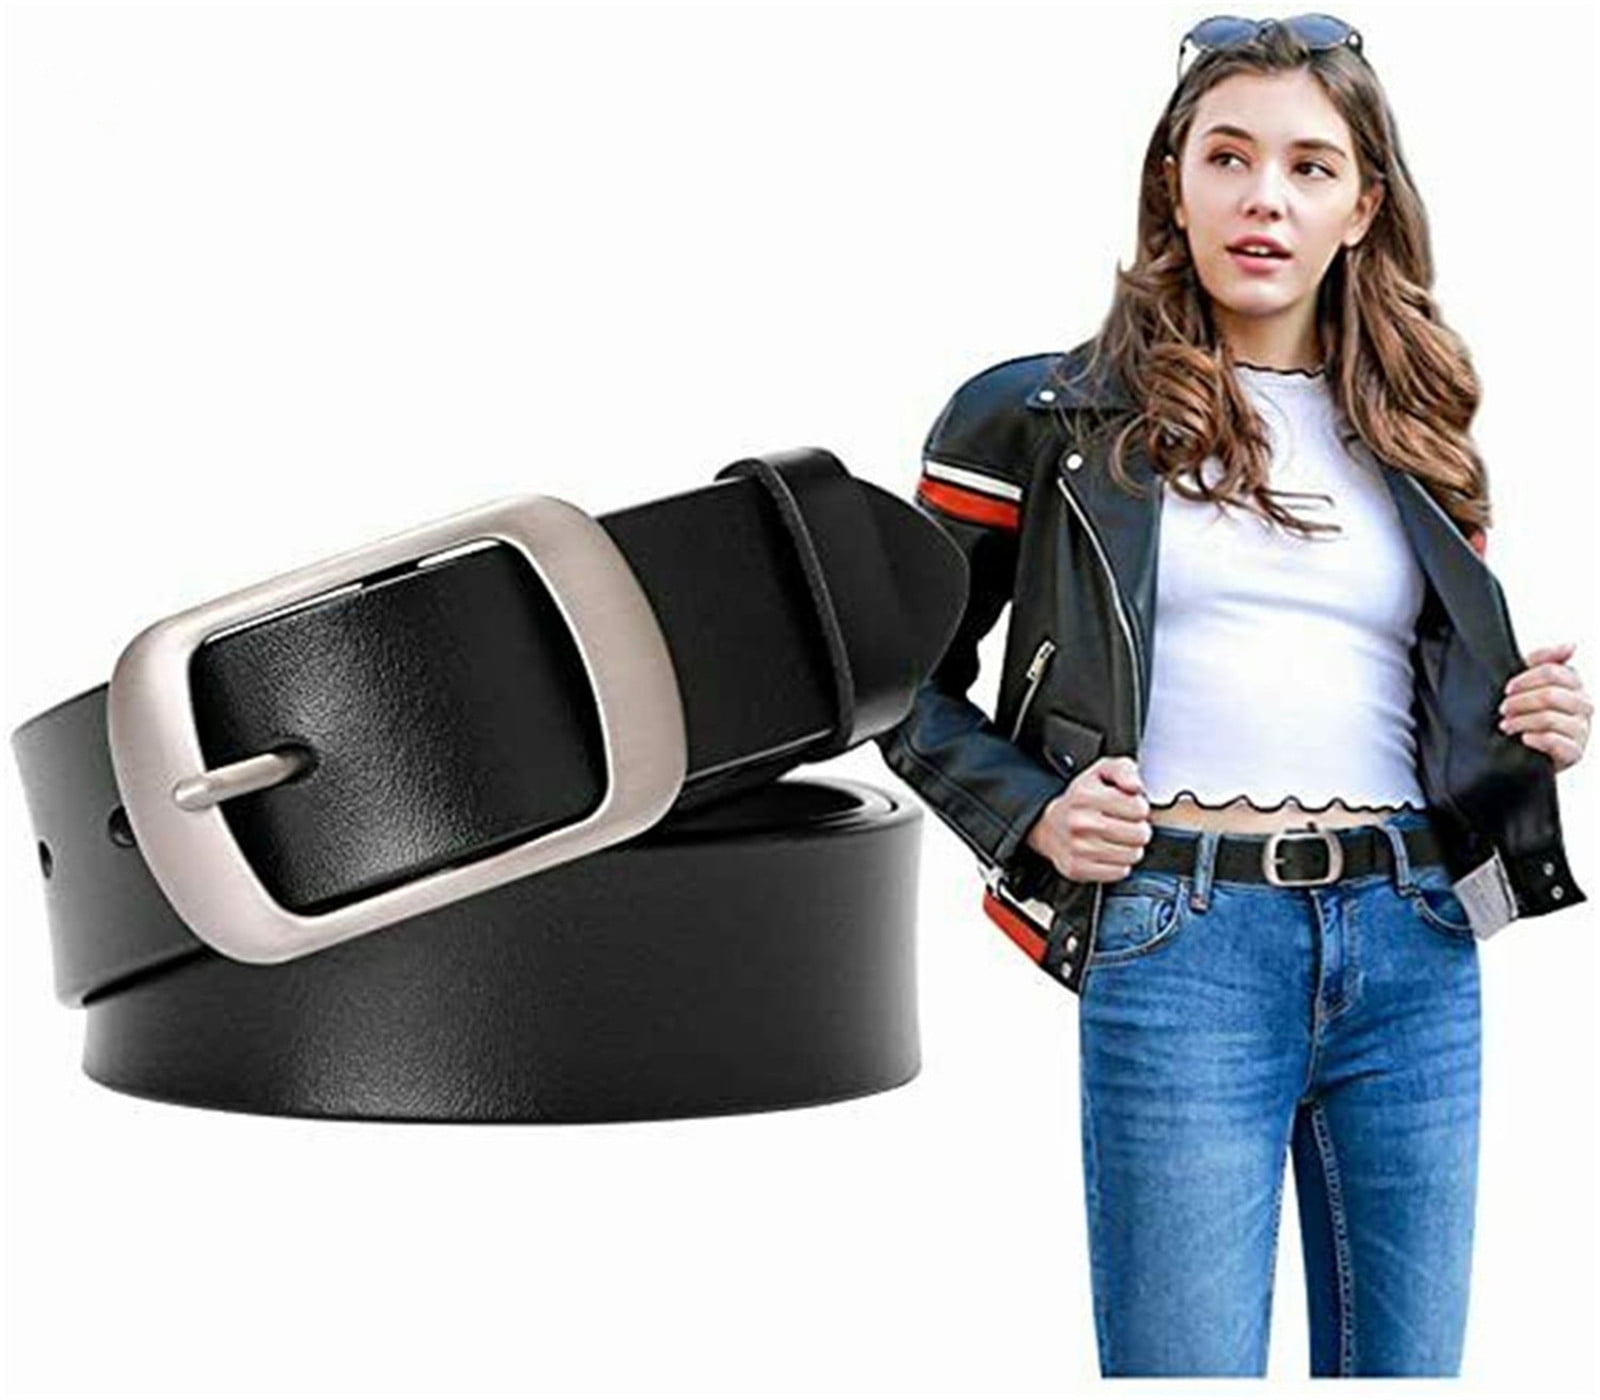 Womens Casual Brown Leather Trouser Belt - Belt Designs